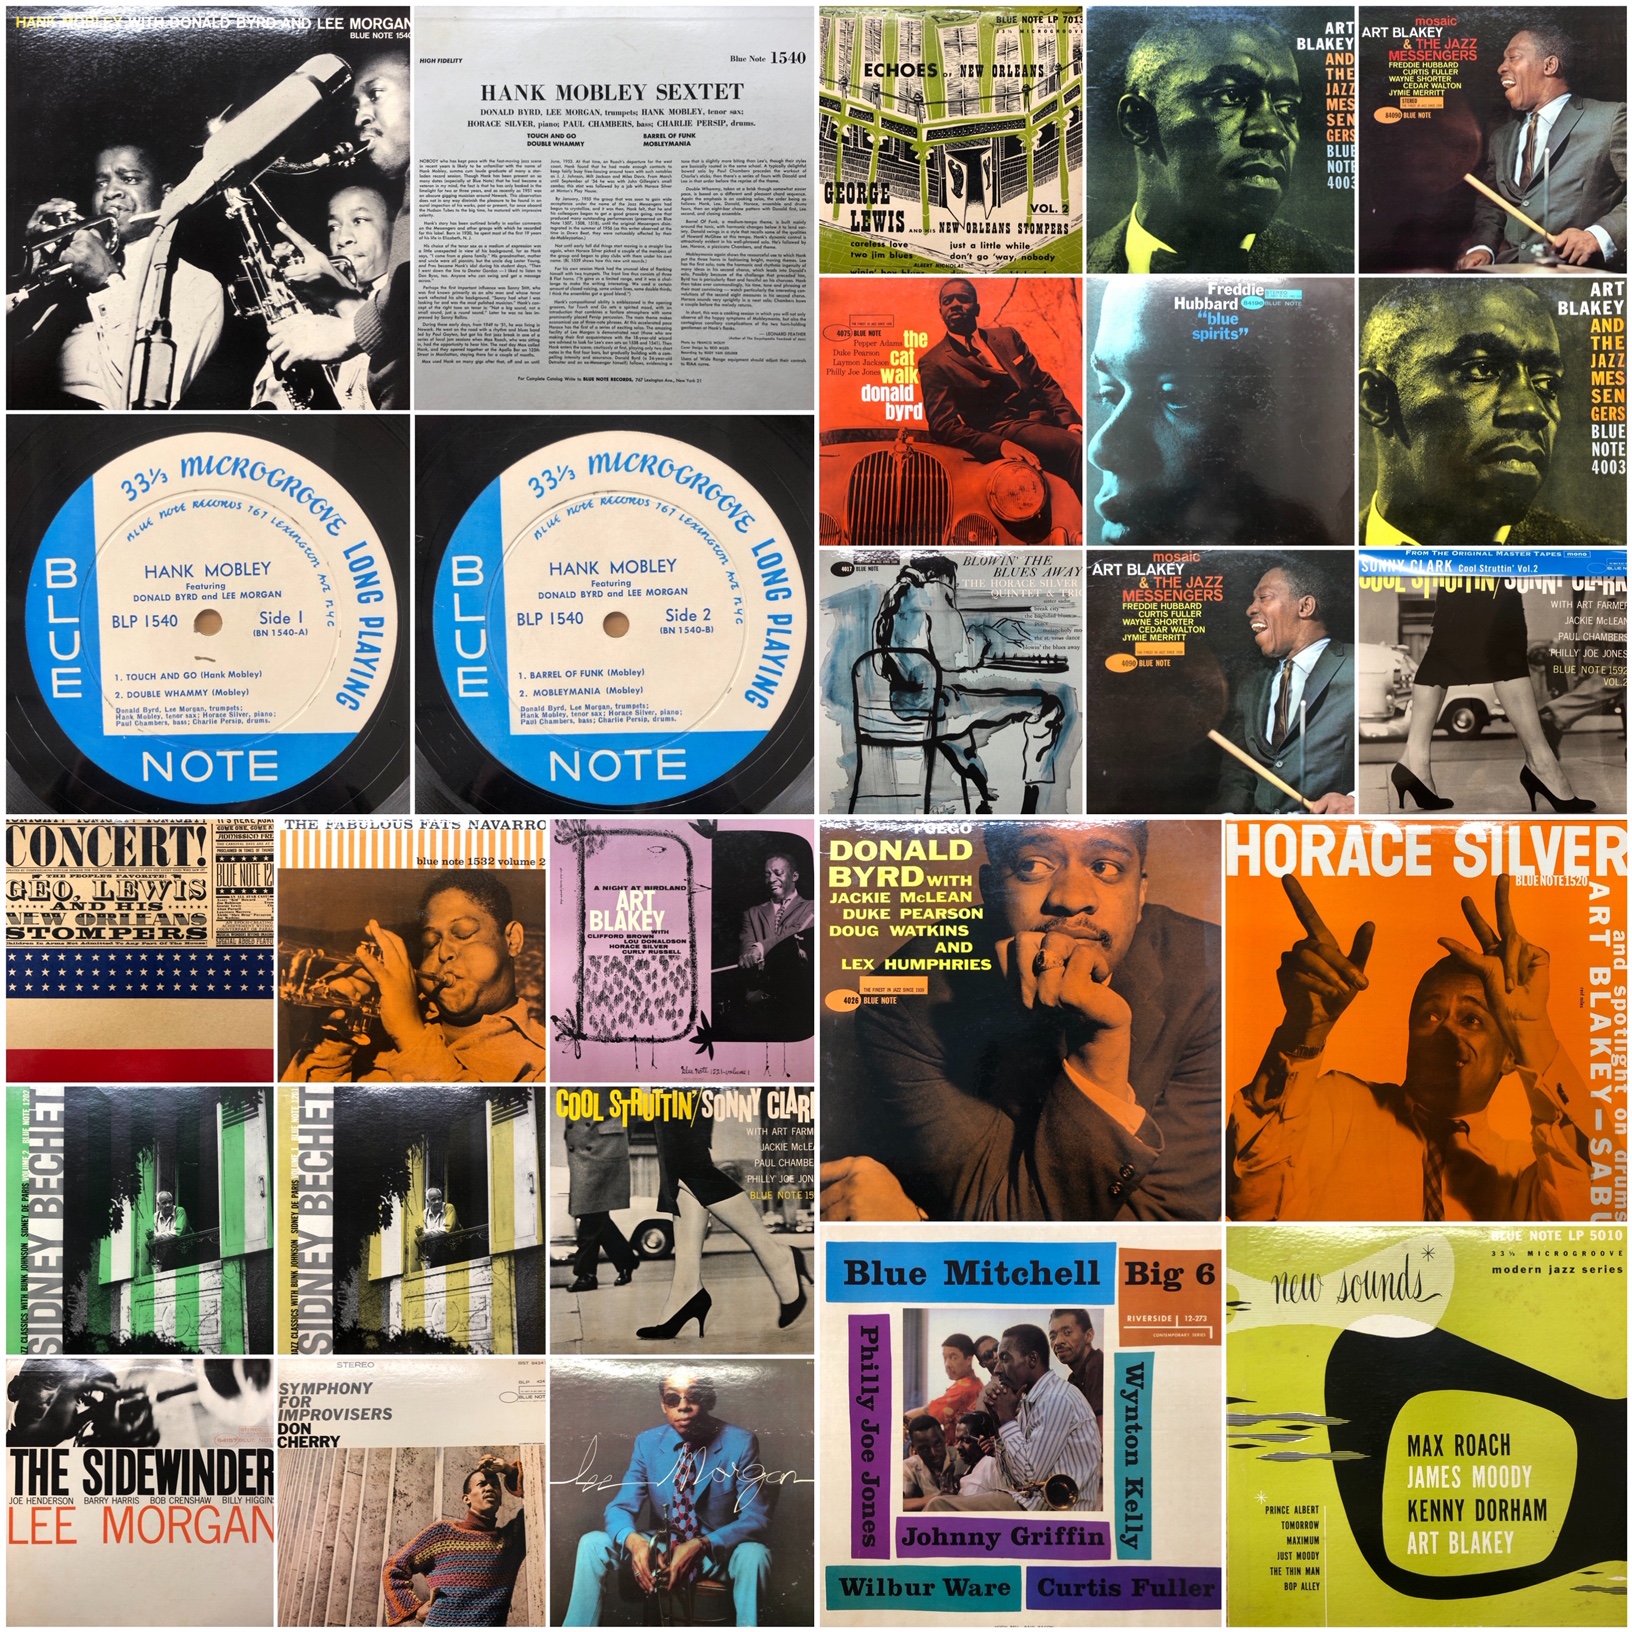 Blue Note Prestige モダン ジャズ 中古レコード大放出 12 21 土 Modern Jazz Lp Sale 12 18 水 追加放出リスト掲載 General Record Store